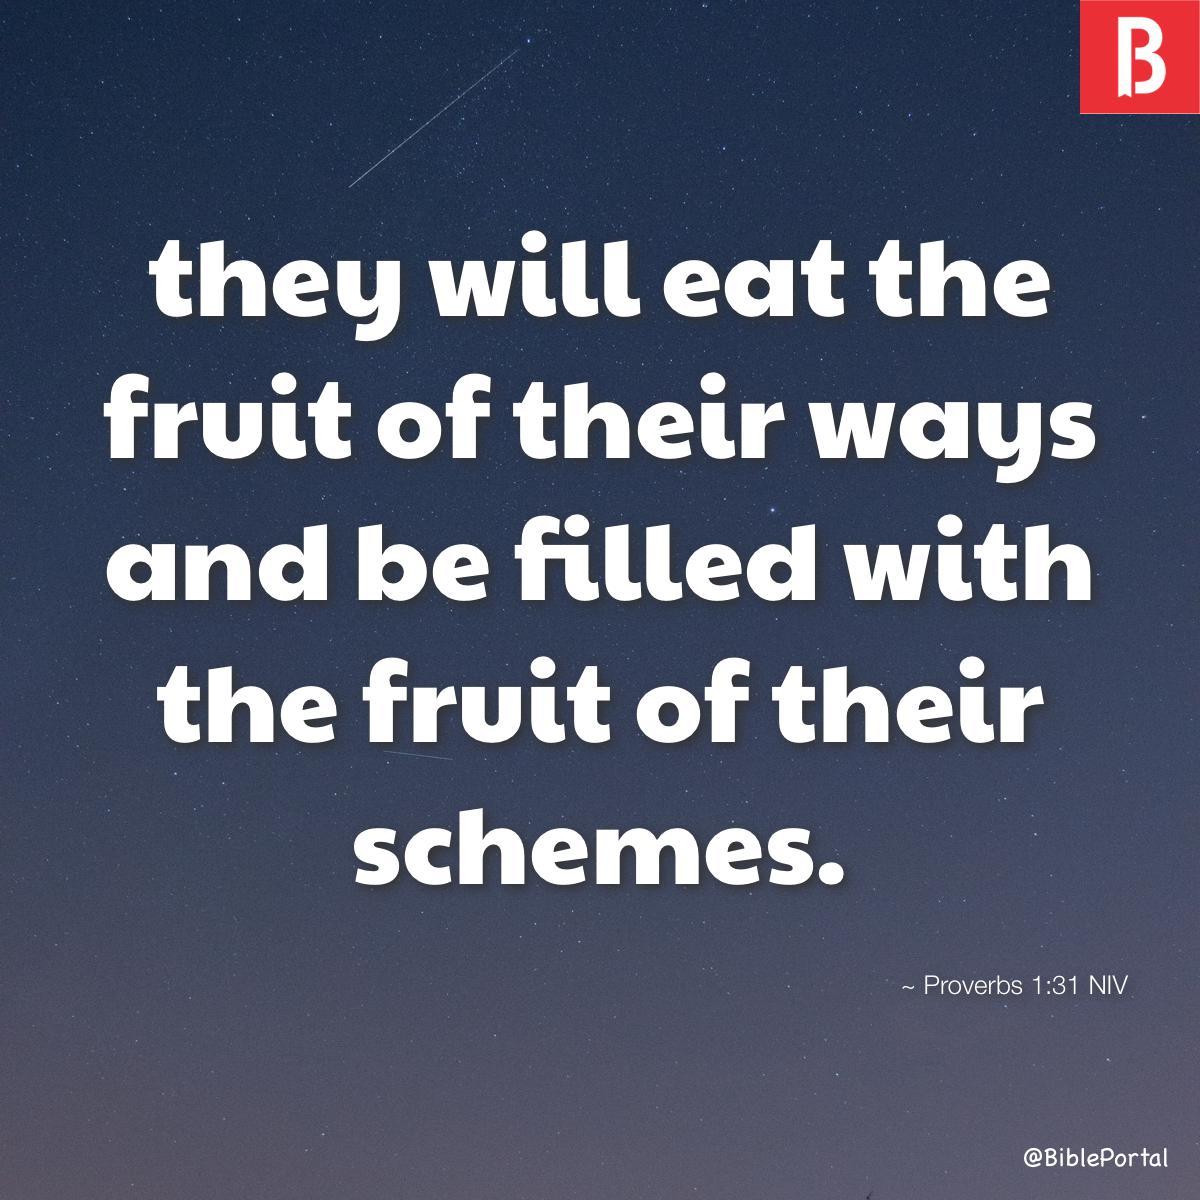 Proverbs 1:31 NIV